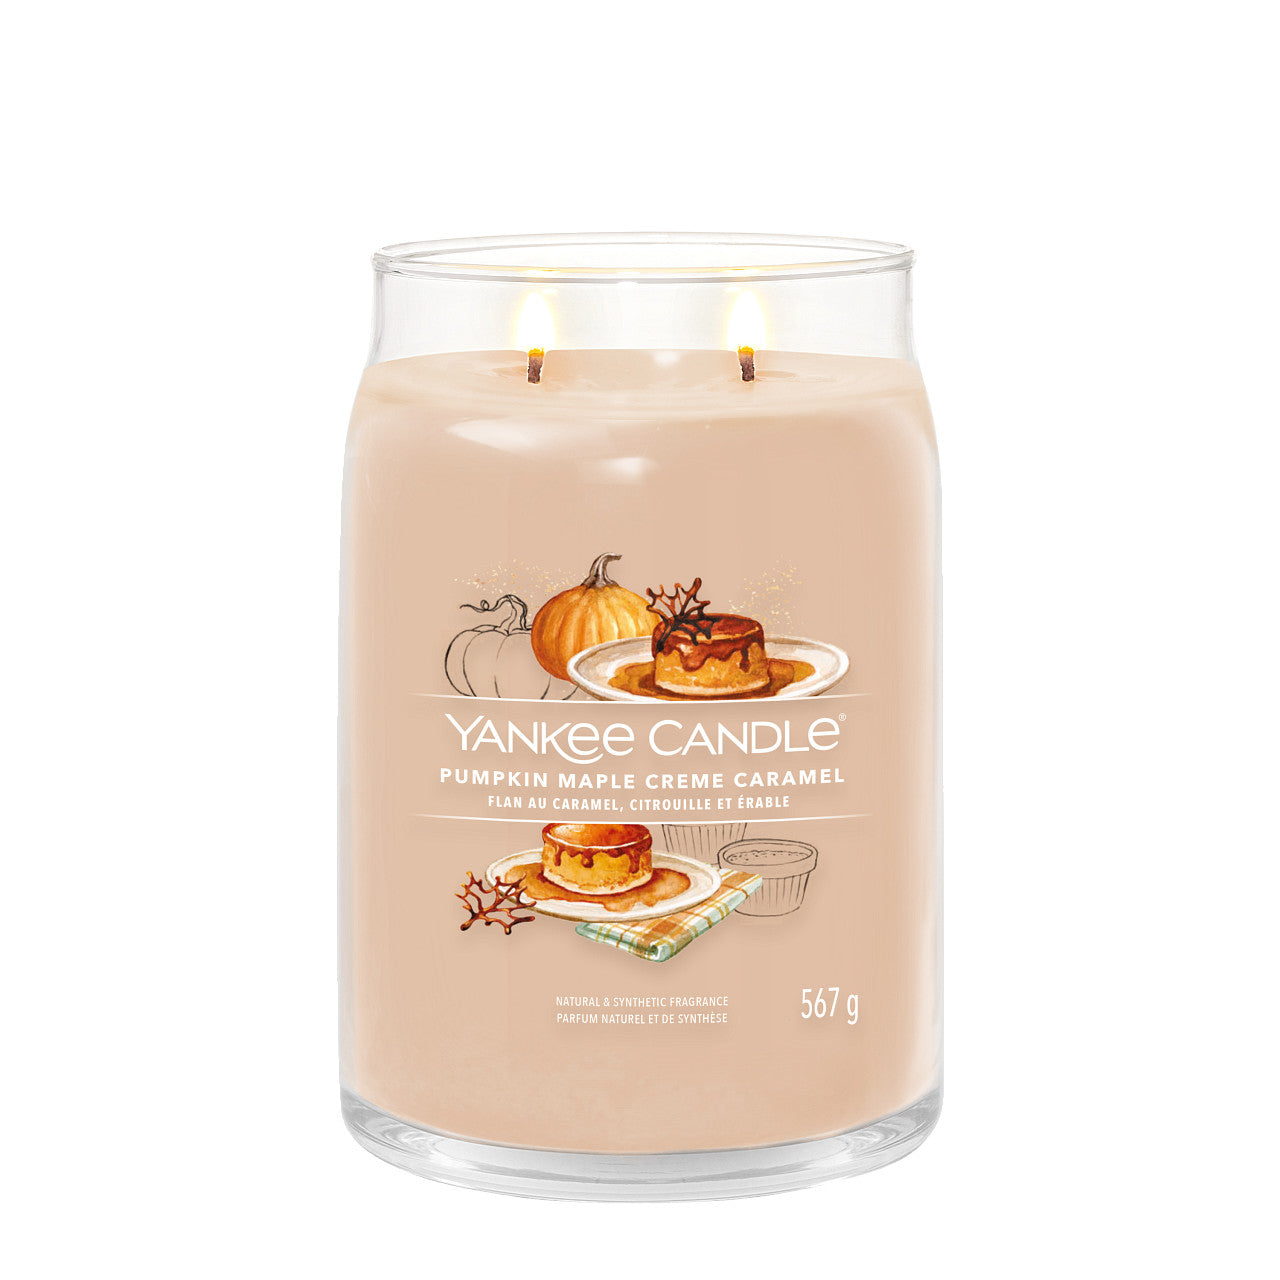 Pumpkin Maple Crème Caramel - Signature Large Jar Scented Candle